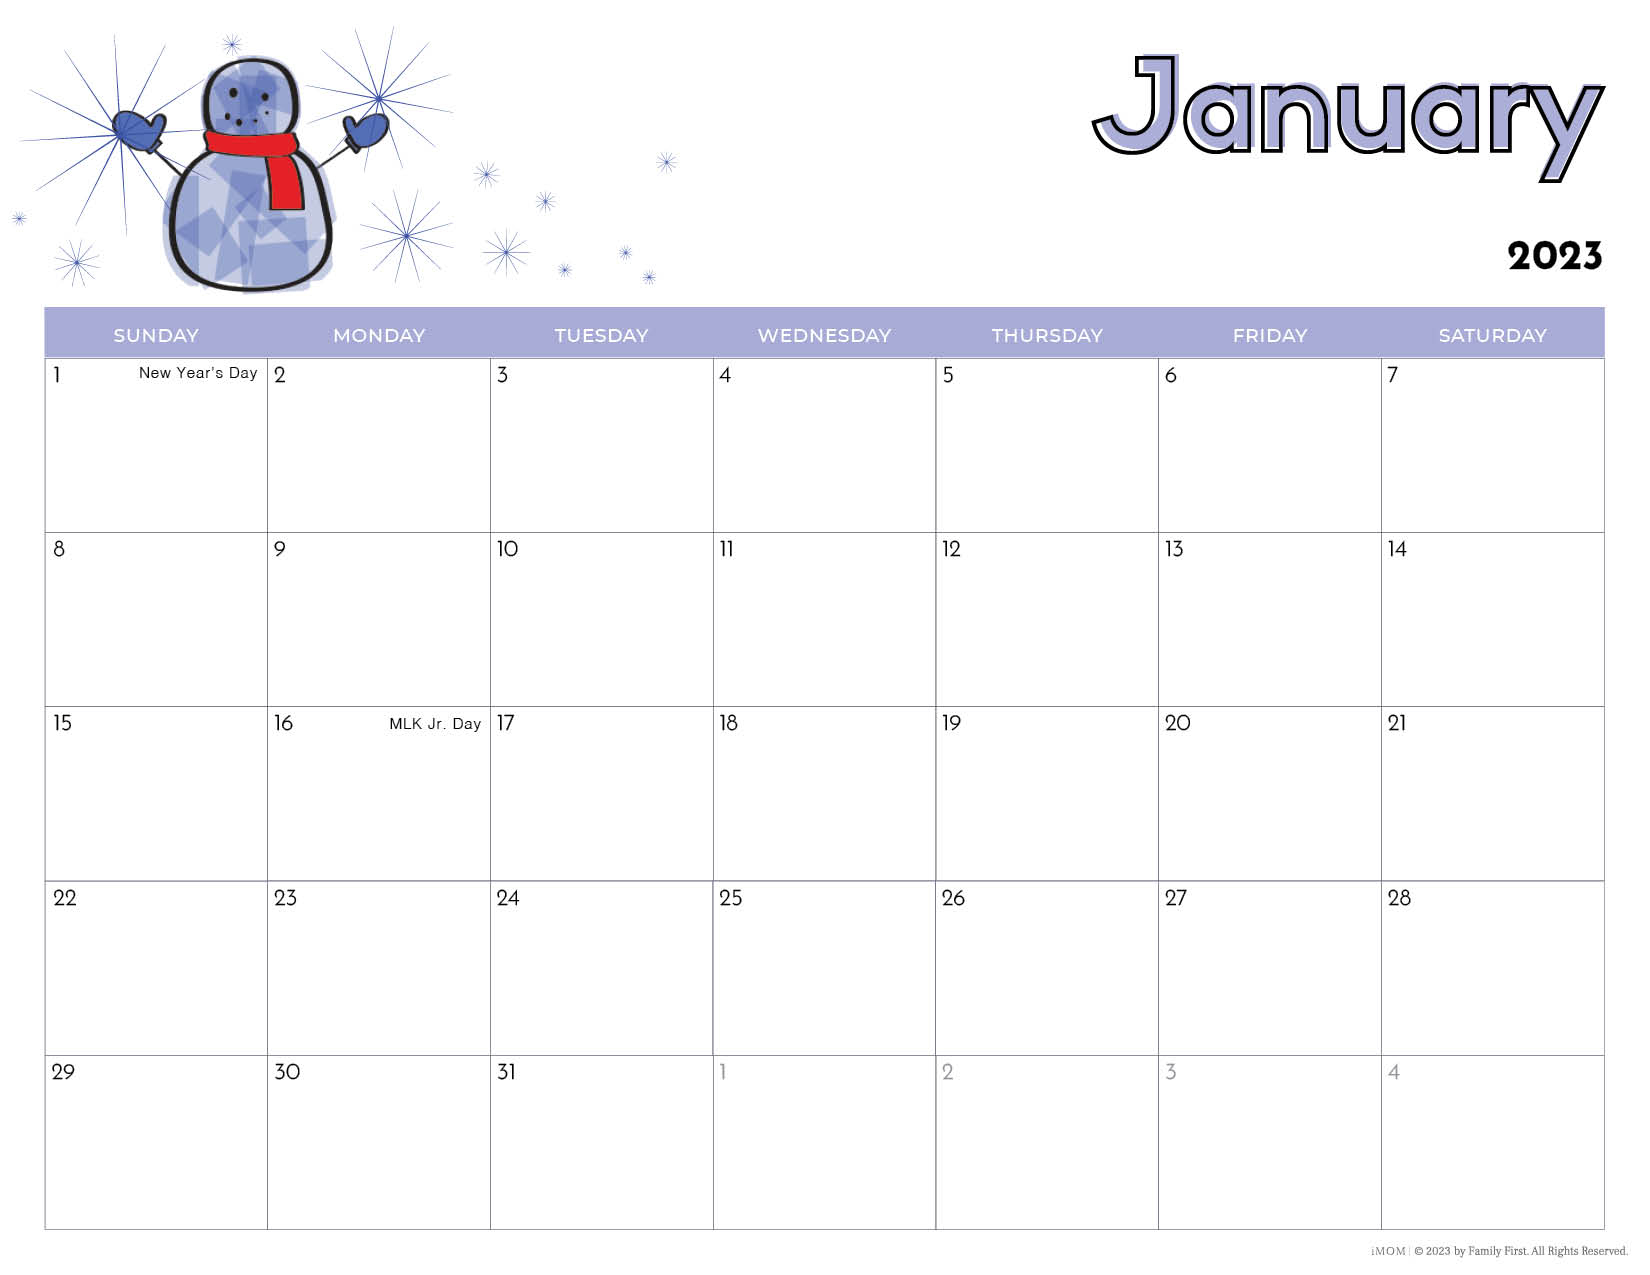 10-10 Printable Calendars for Kids - iMOM For Blank Calendar Template For Kids